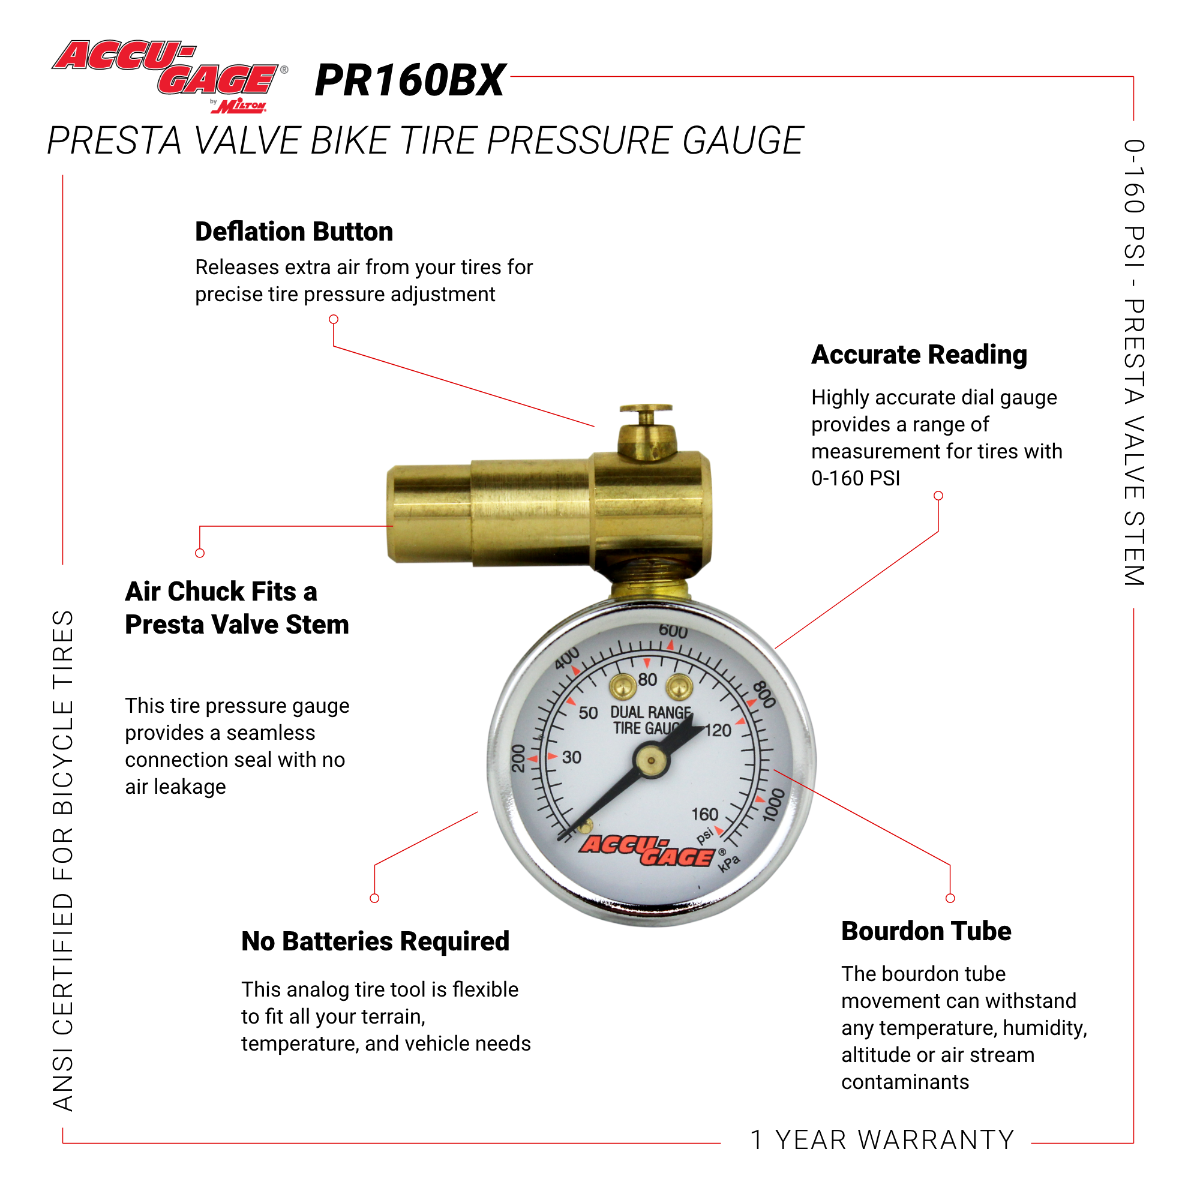 ACCU-GAGE® by Milton® Presta Valve Bike Tire Pressure Gauge with Bleeder Valve, for 0-160 PSI - ANSI Certified